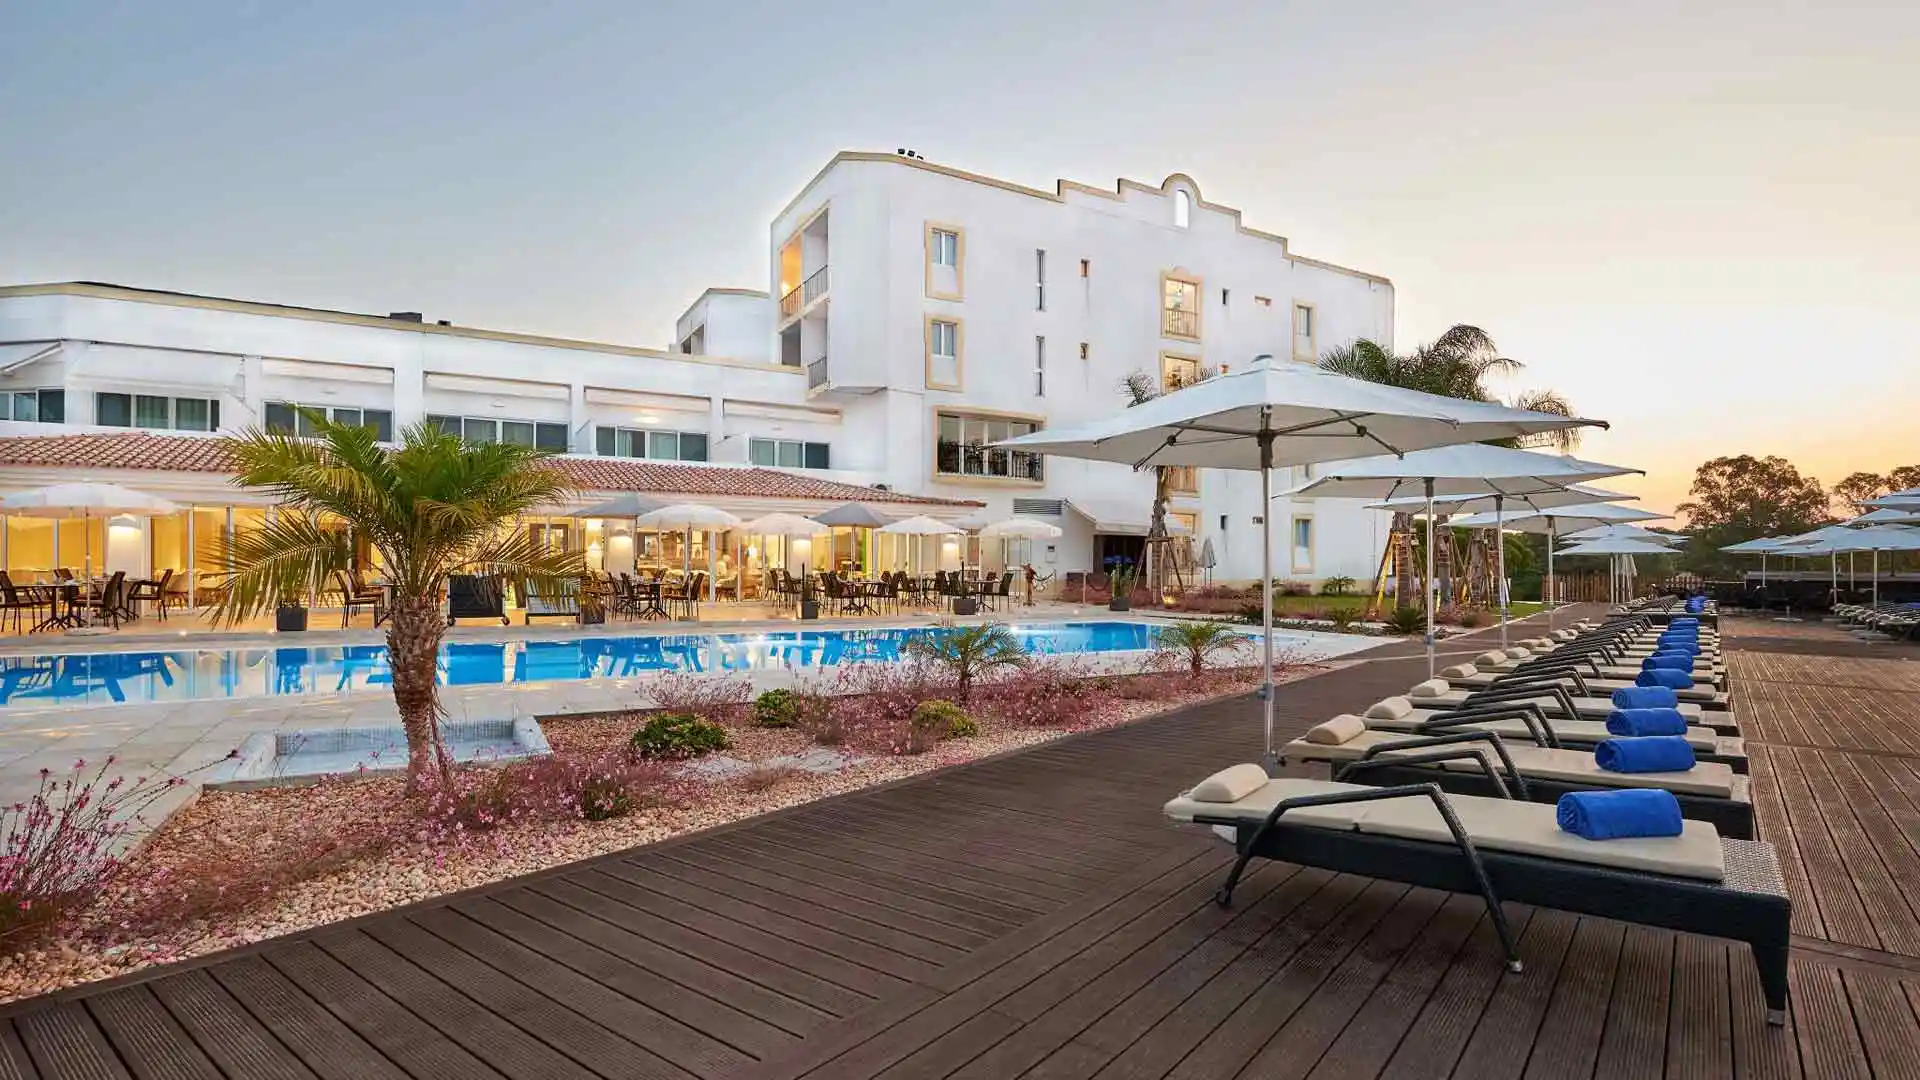 Dona Filipa Hotel  in Vale do Lobo - Portugal Golf Holidays - Photo 1